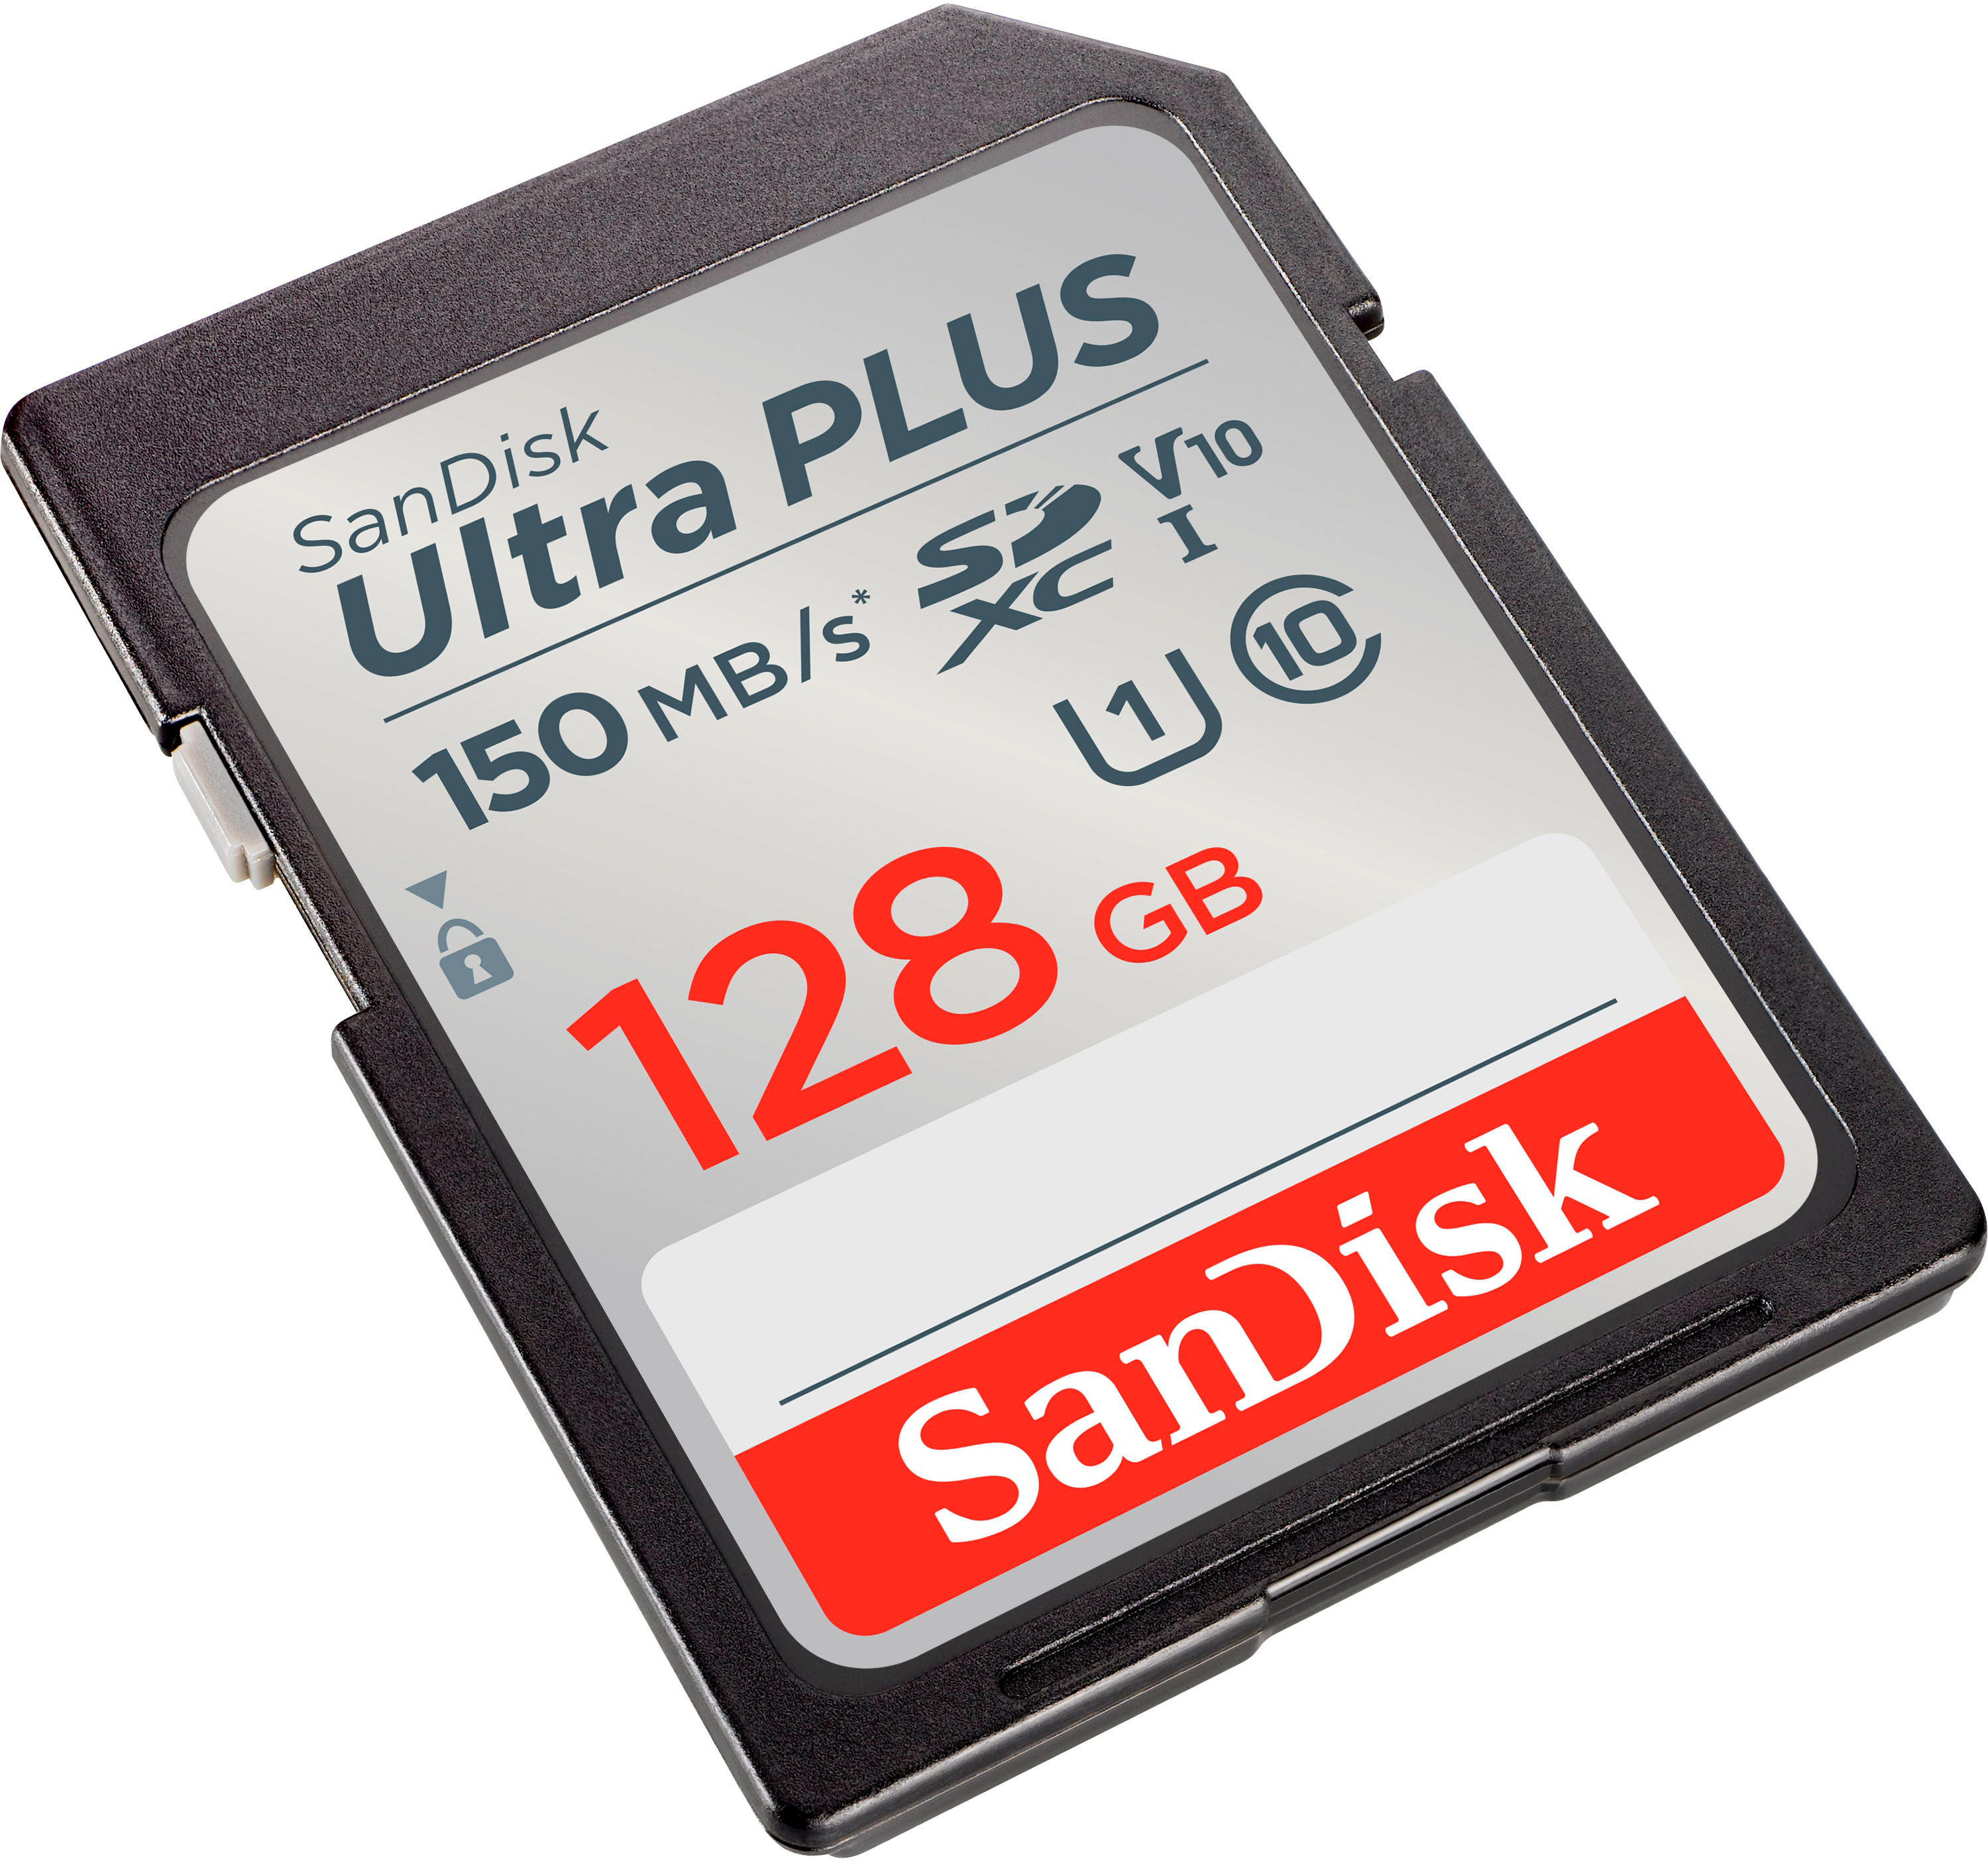 SanDisk Ultra - flash memory card - 128 GB - microSDXC UHS-I